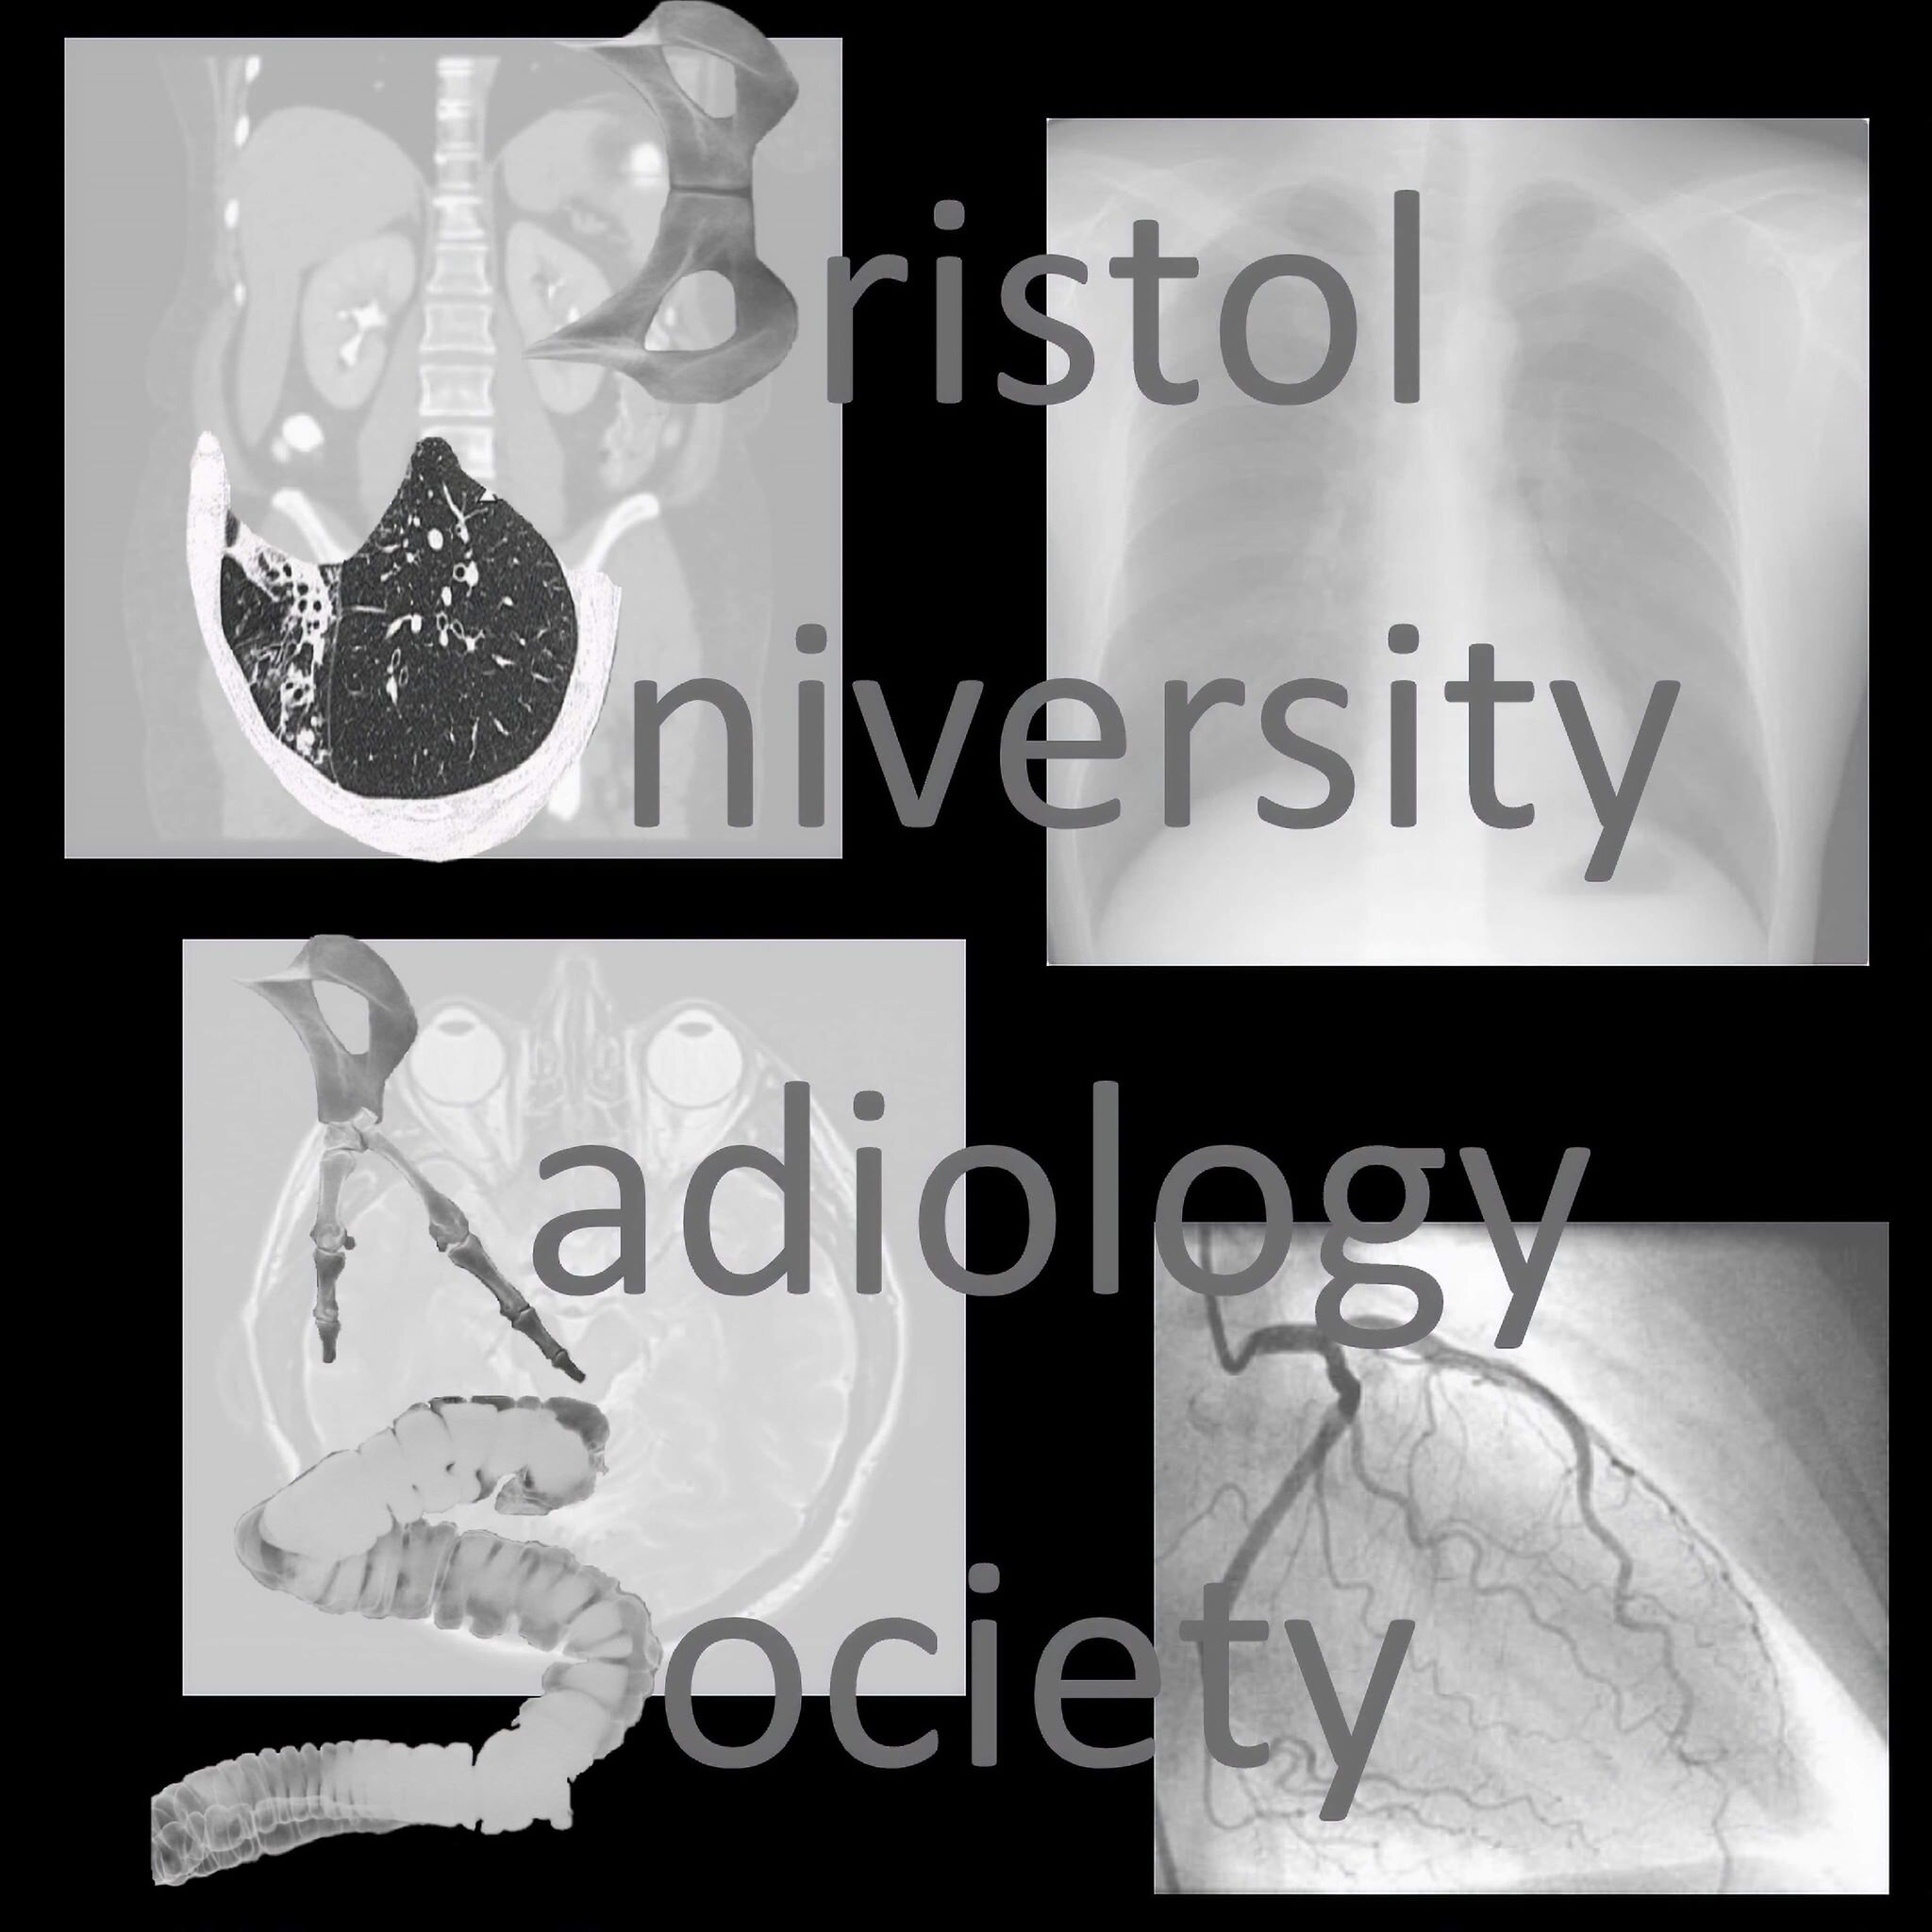 Radiology Society